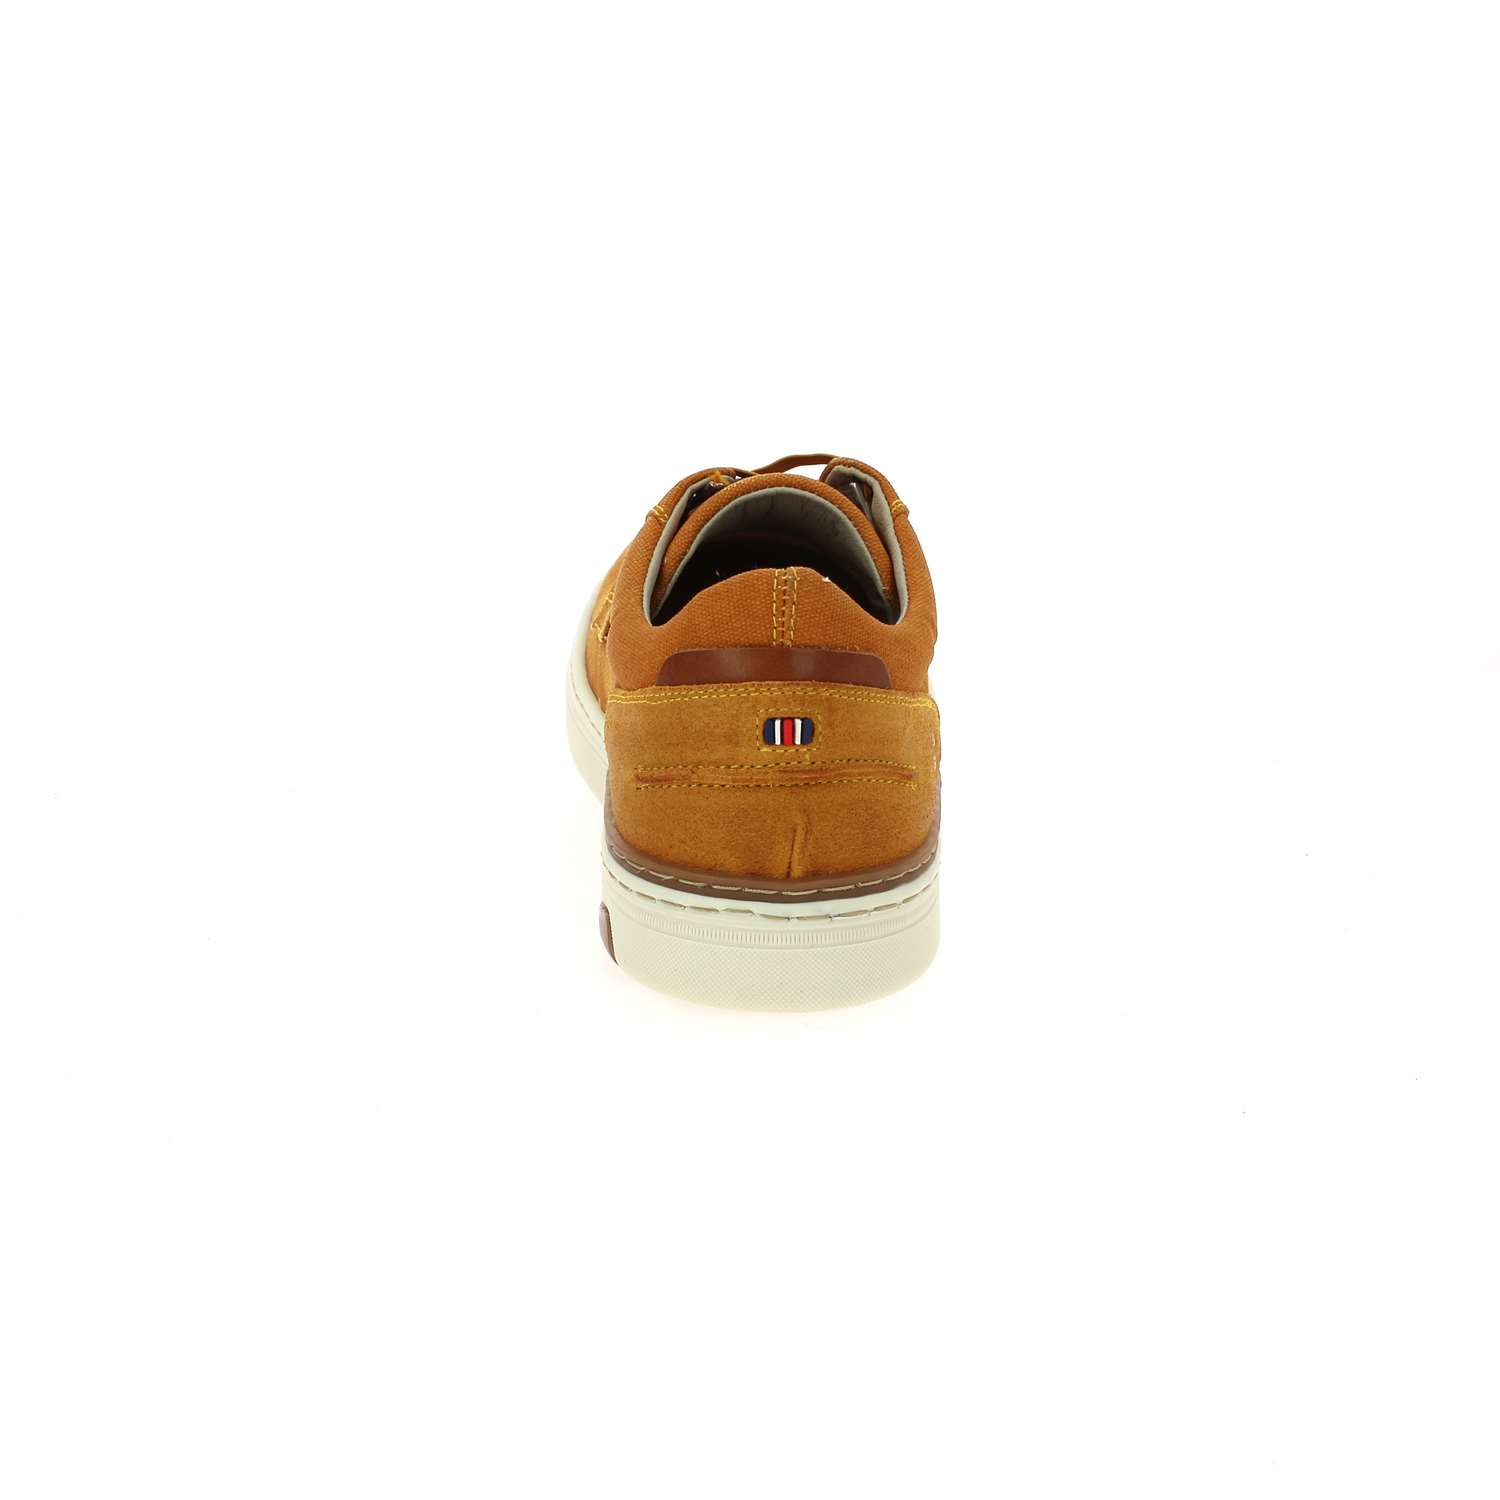 04 - BULTOM - BULLBOXER - Chaussures à lacets - Cuir